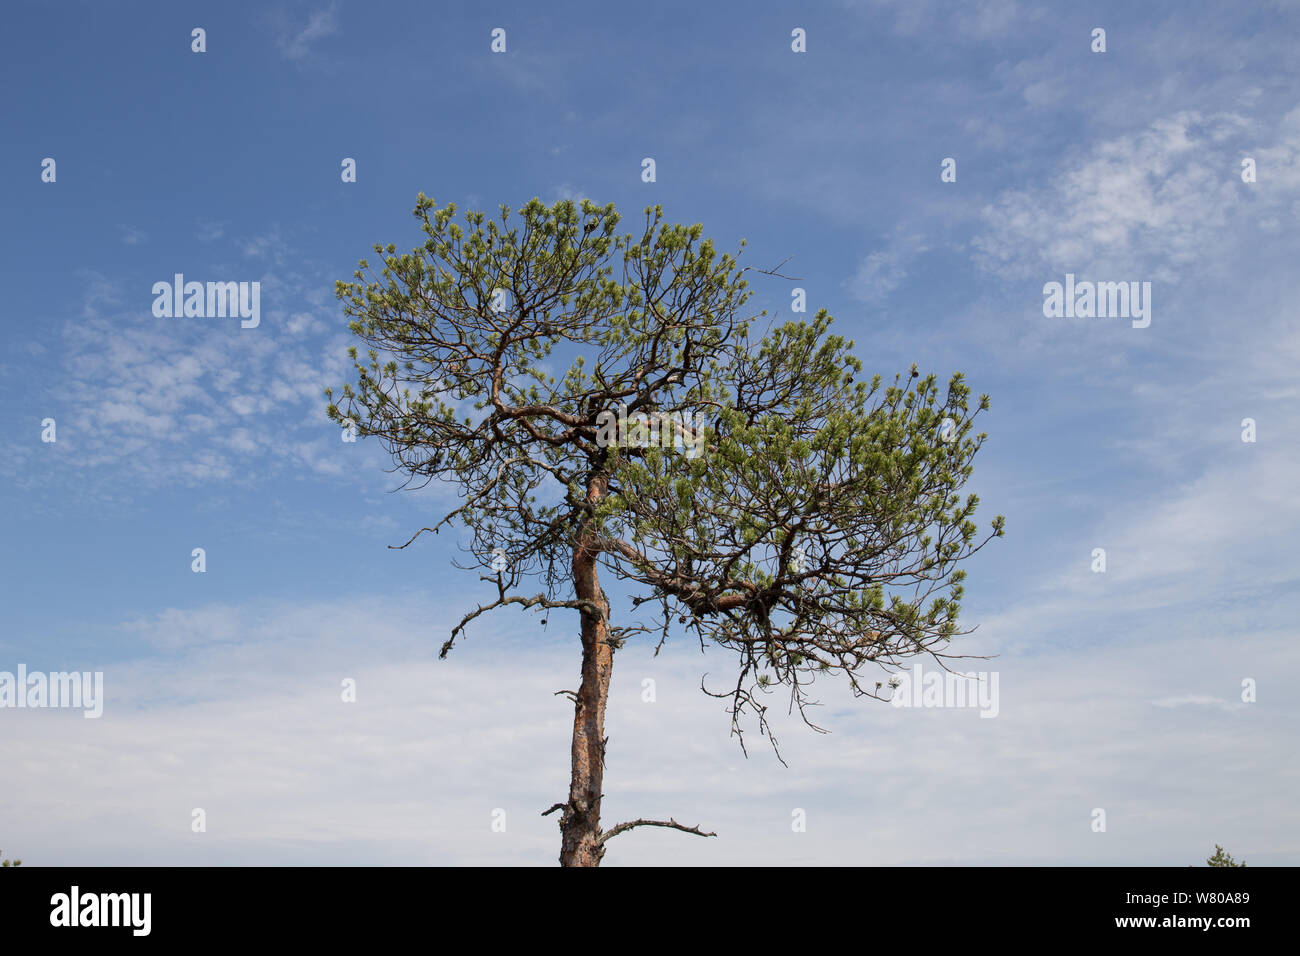 Pine tree in swamp Stock Photo